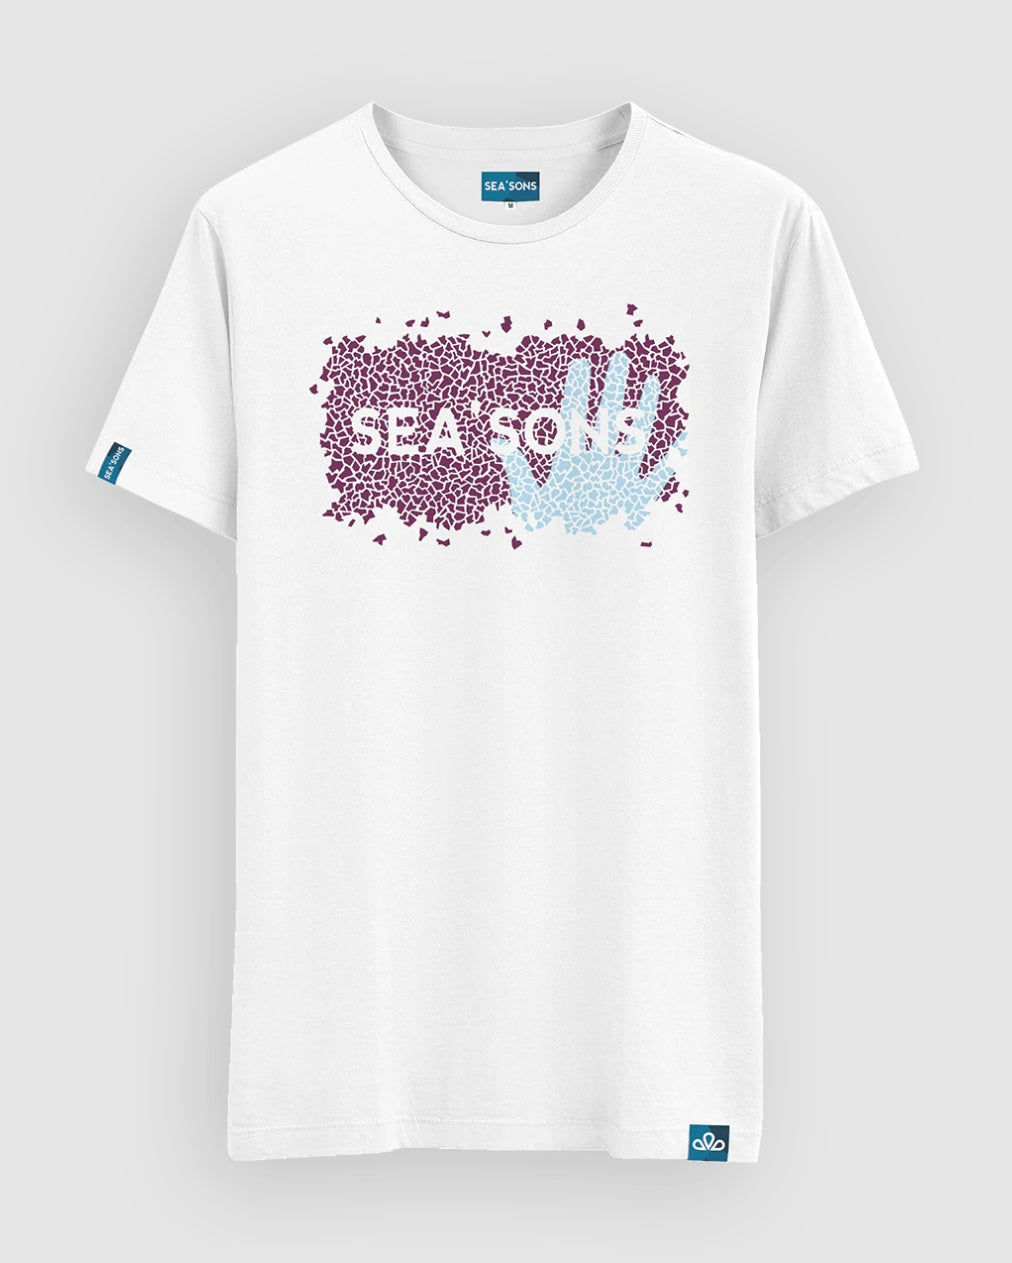 Sea'sons T-shirt heat-sensitive Ocean-Blue